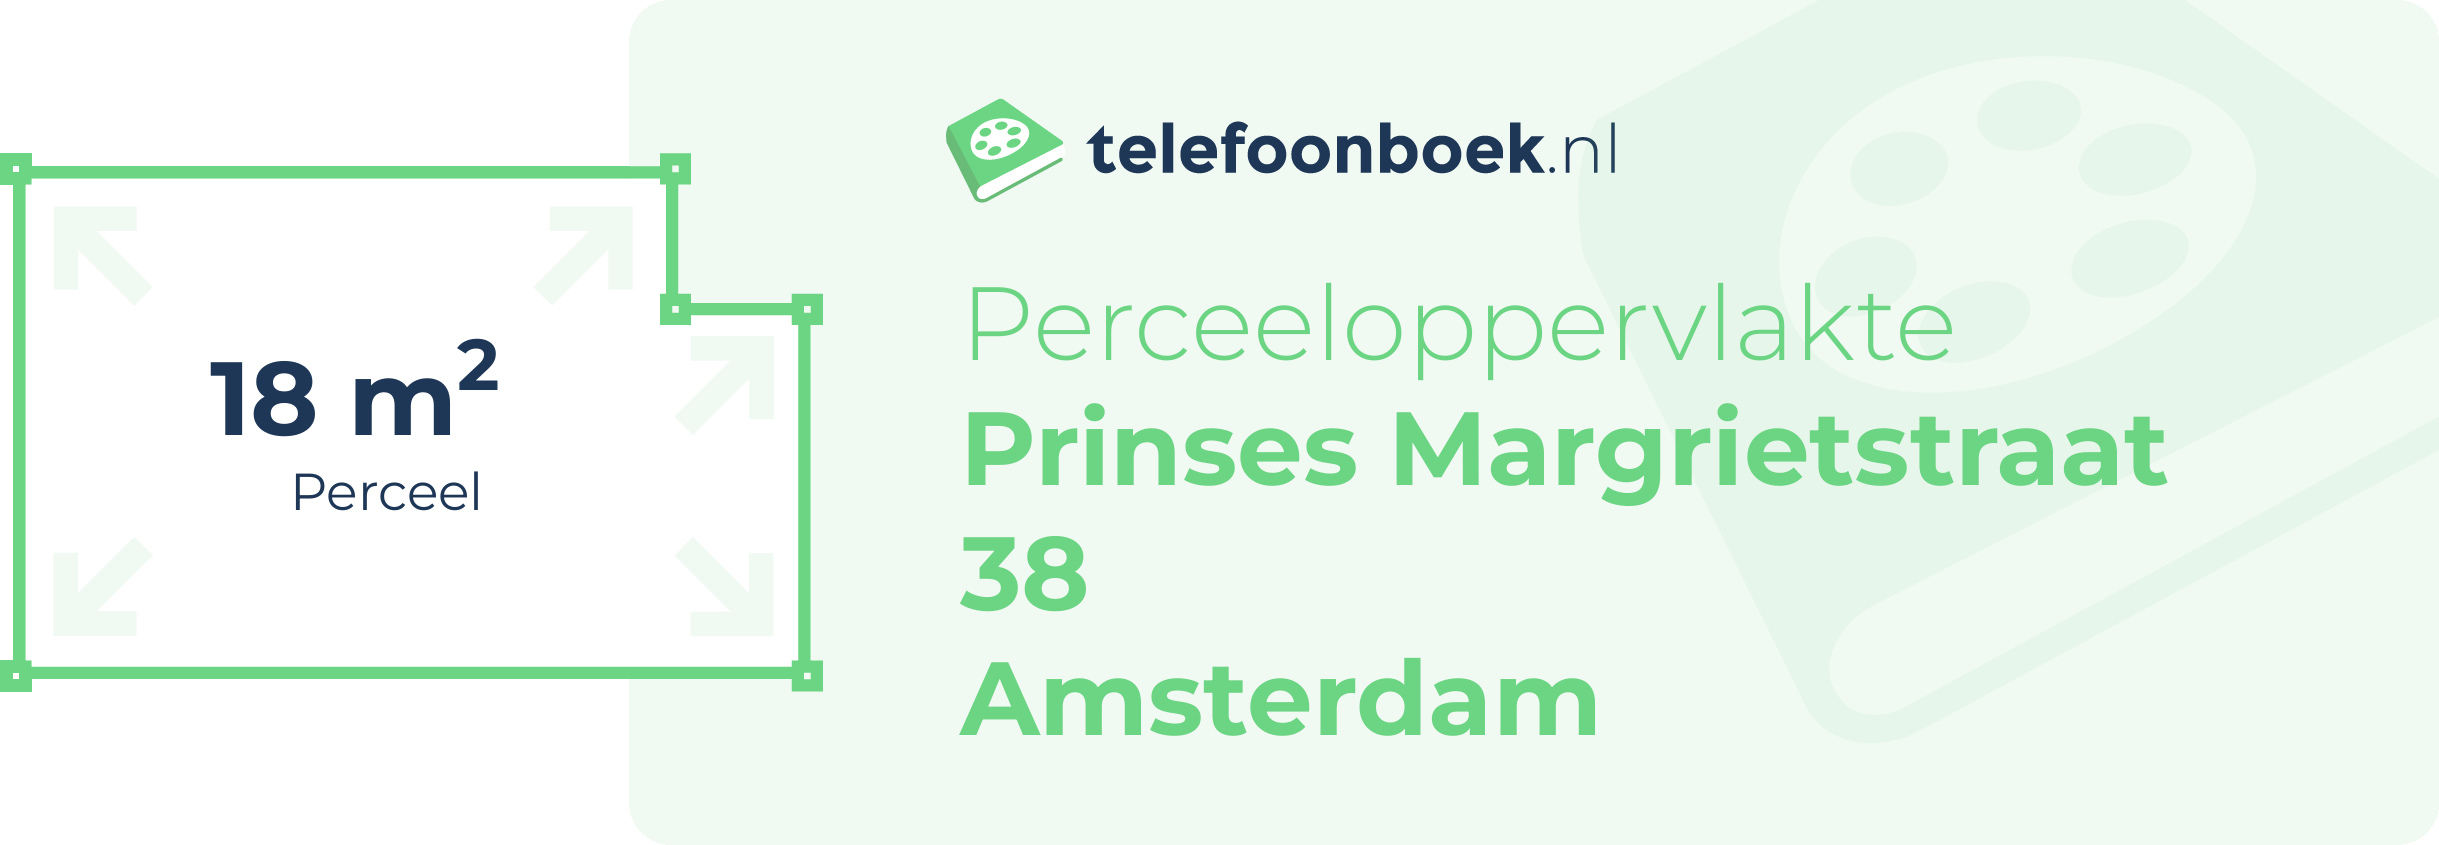 Perceeloppervlakte Prinses Margrietstraat 38 Amsterdam